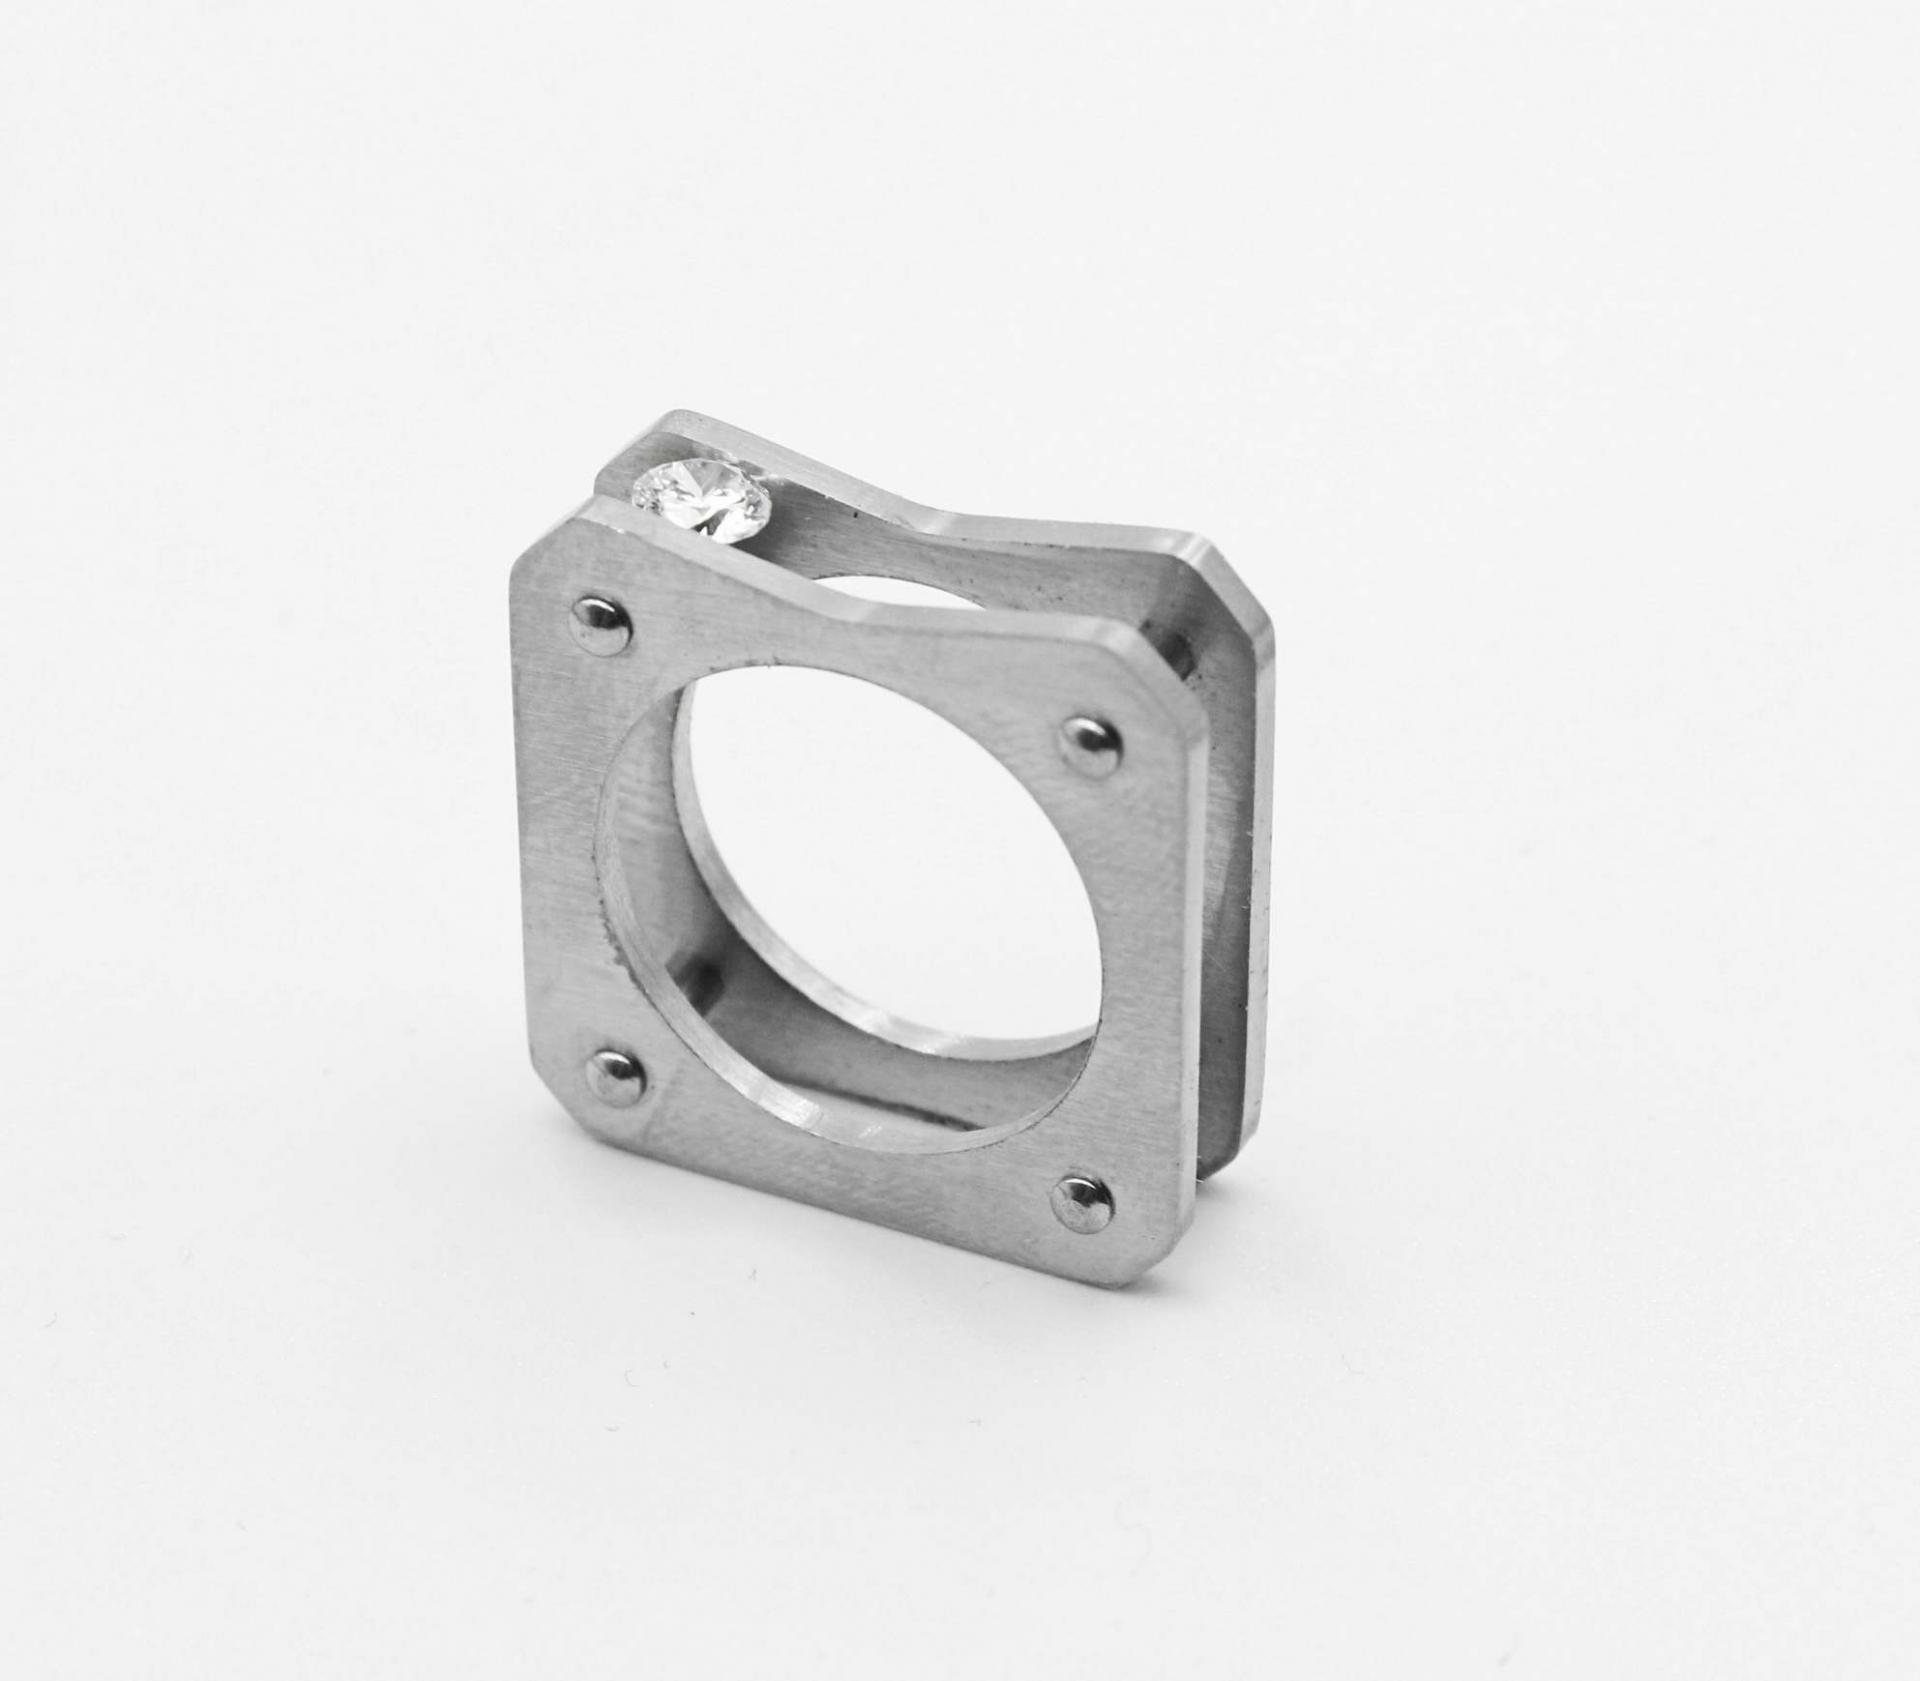 Square Unique Design Stainless Steel Ring